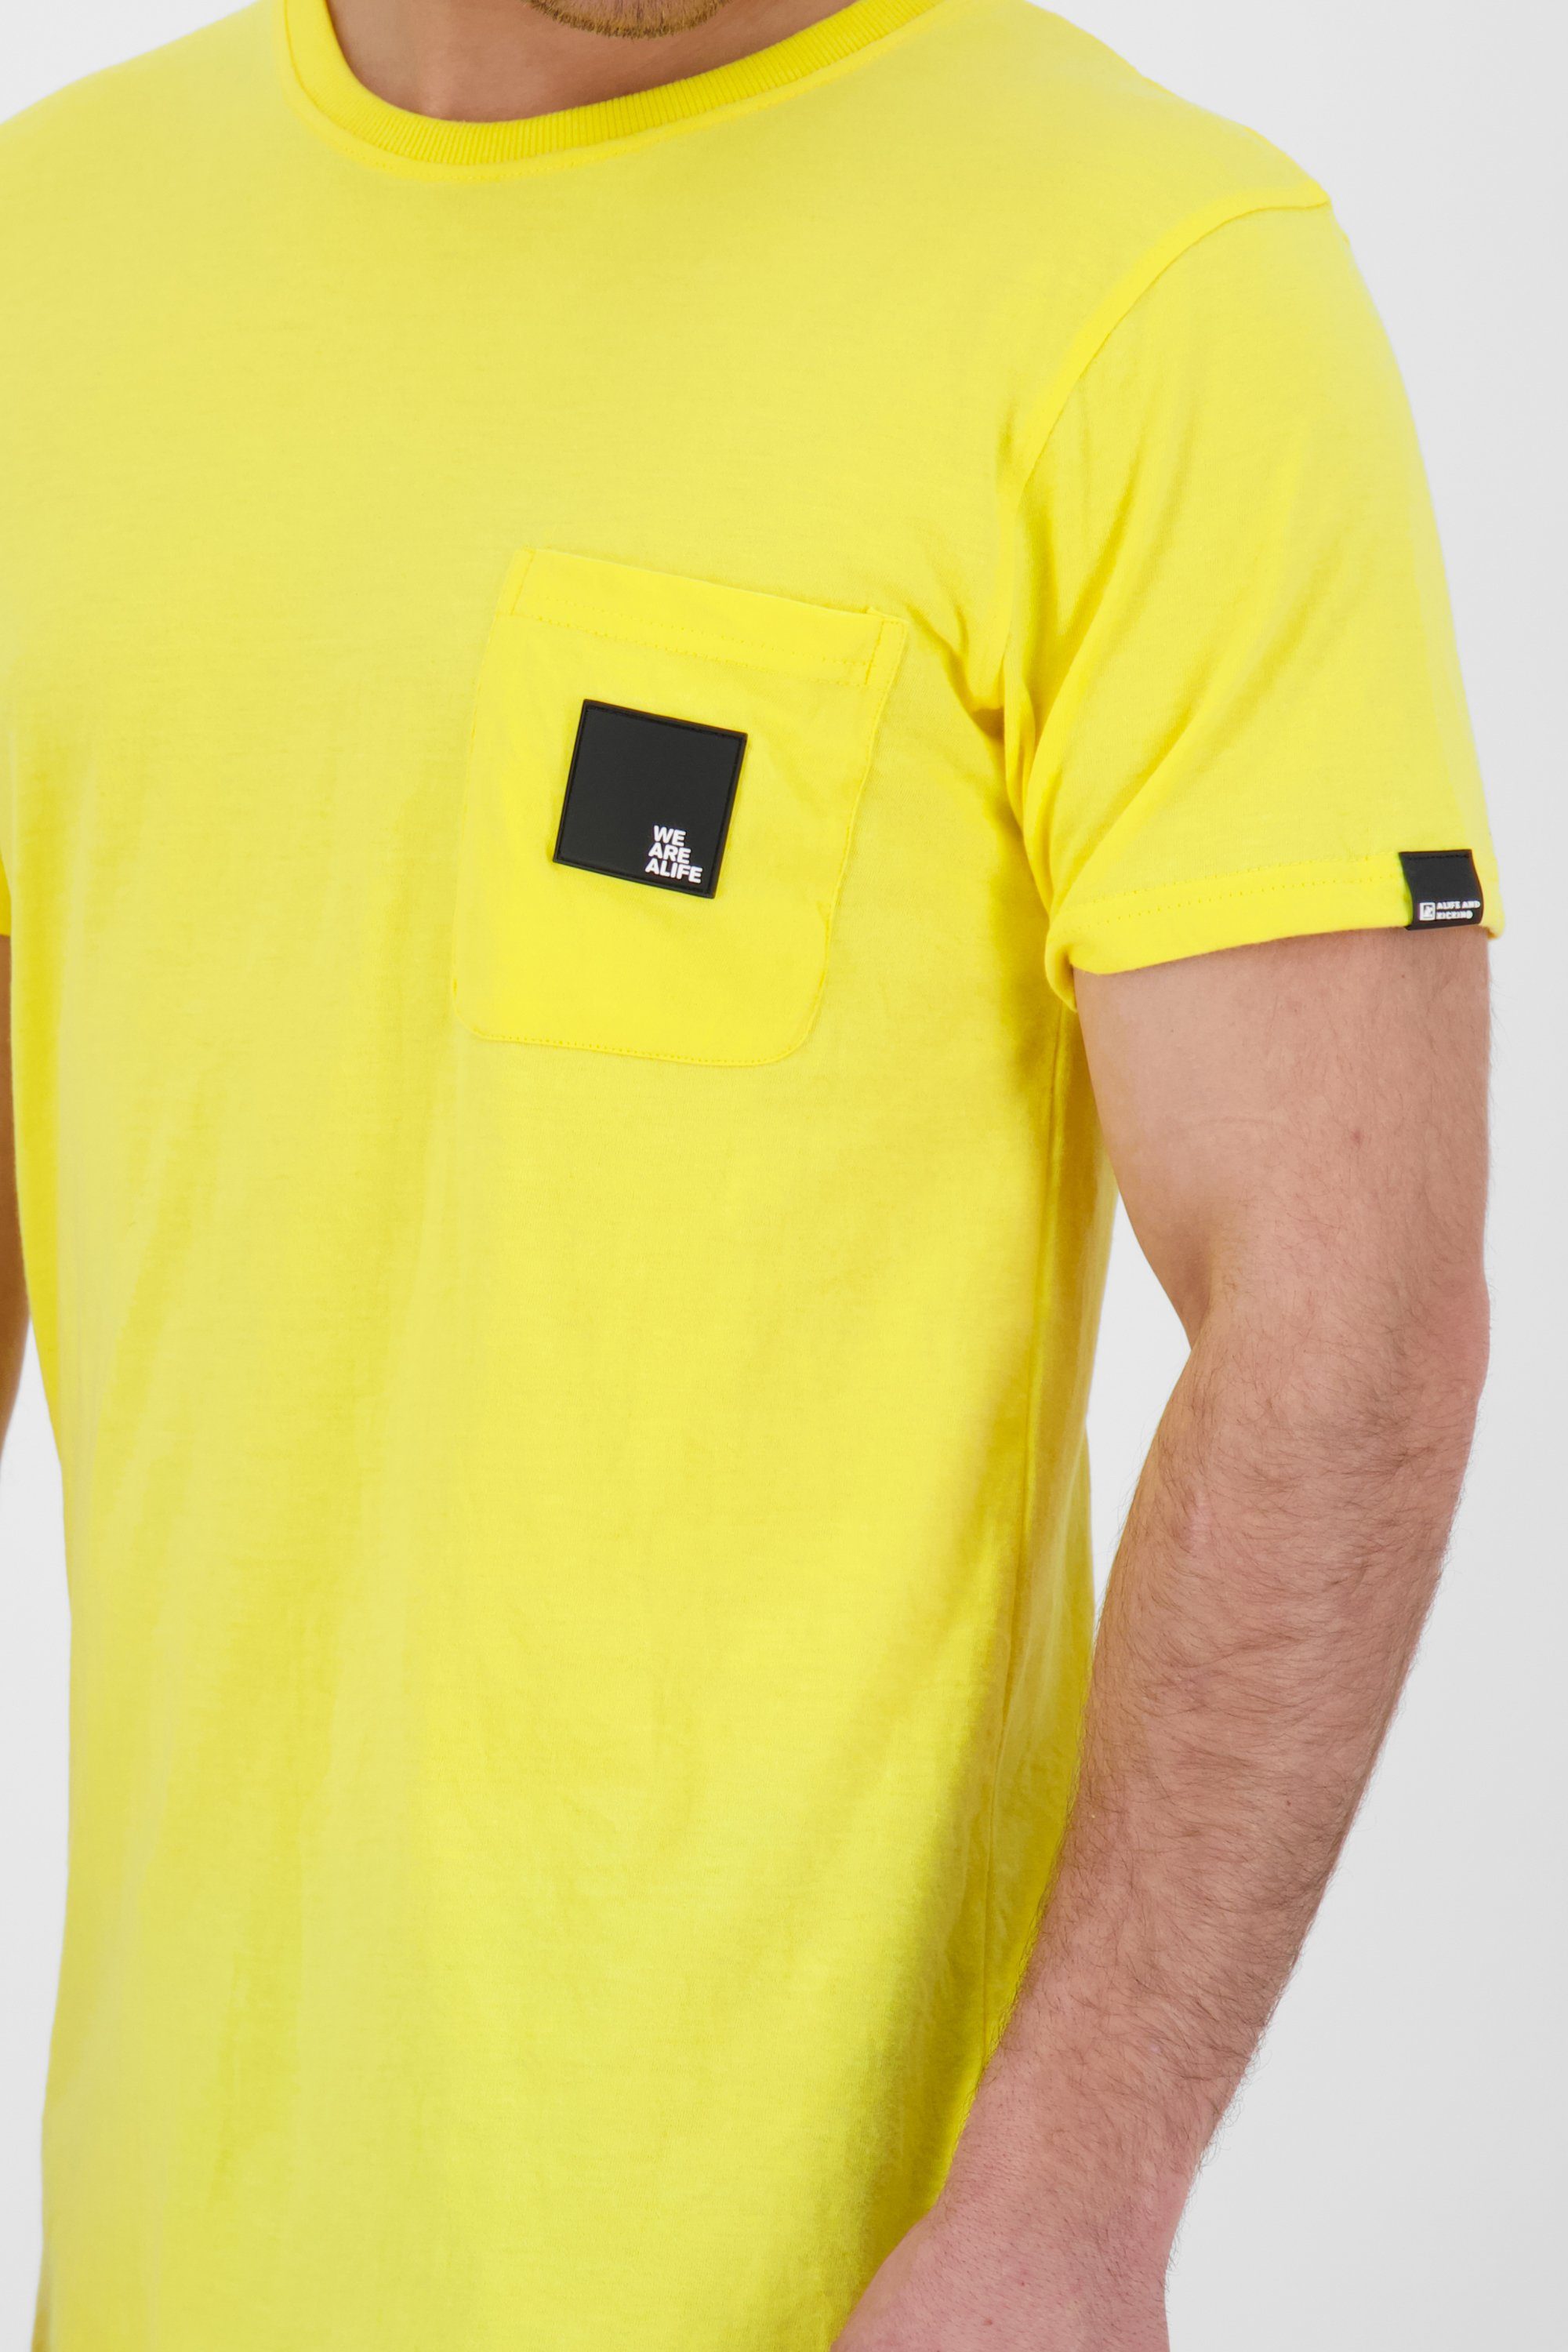 Alife & Logo T-Shirt Kickin T-Shirt PocketAK lime Herren